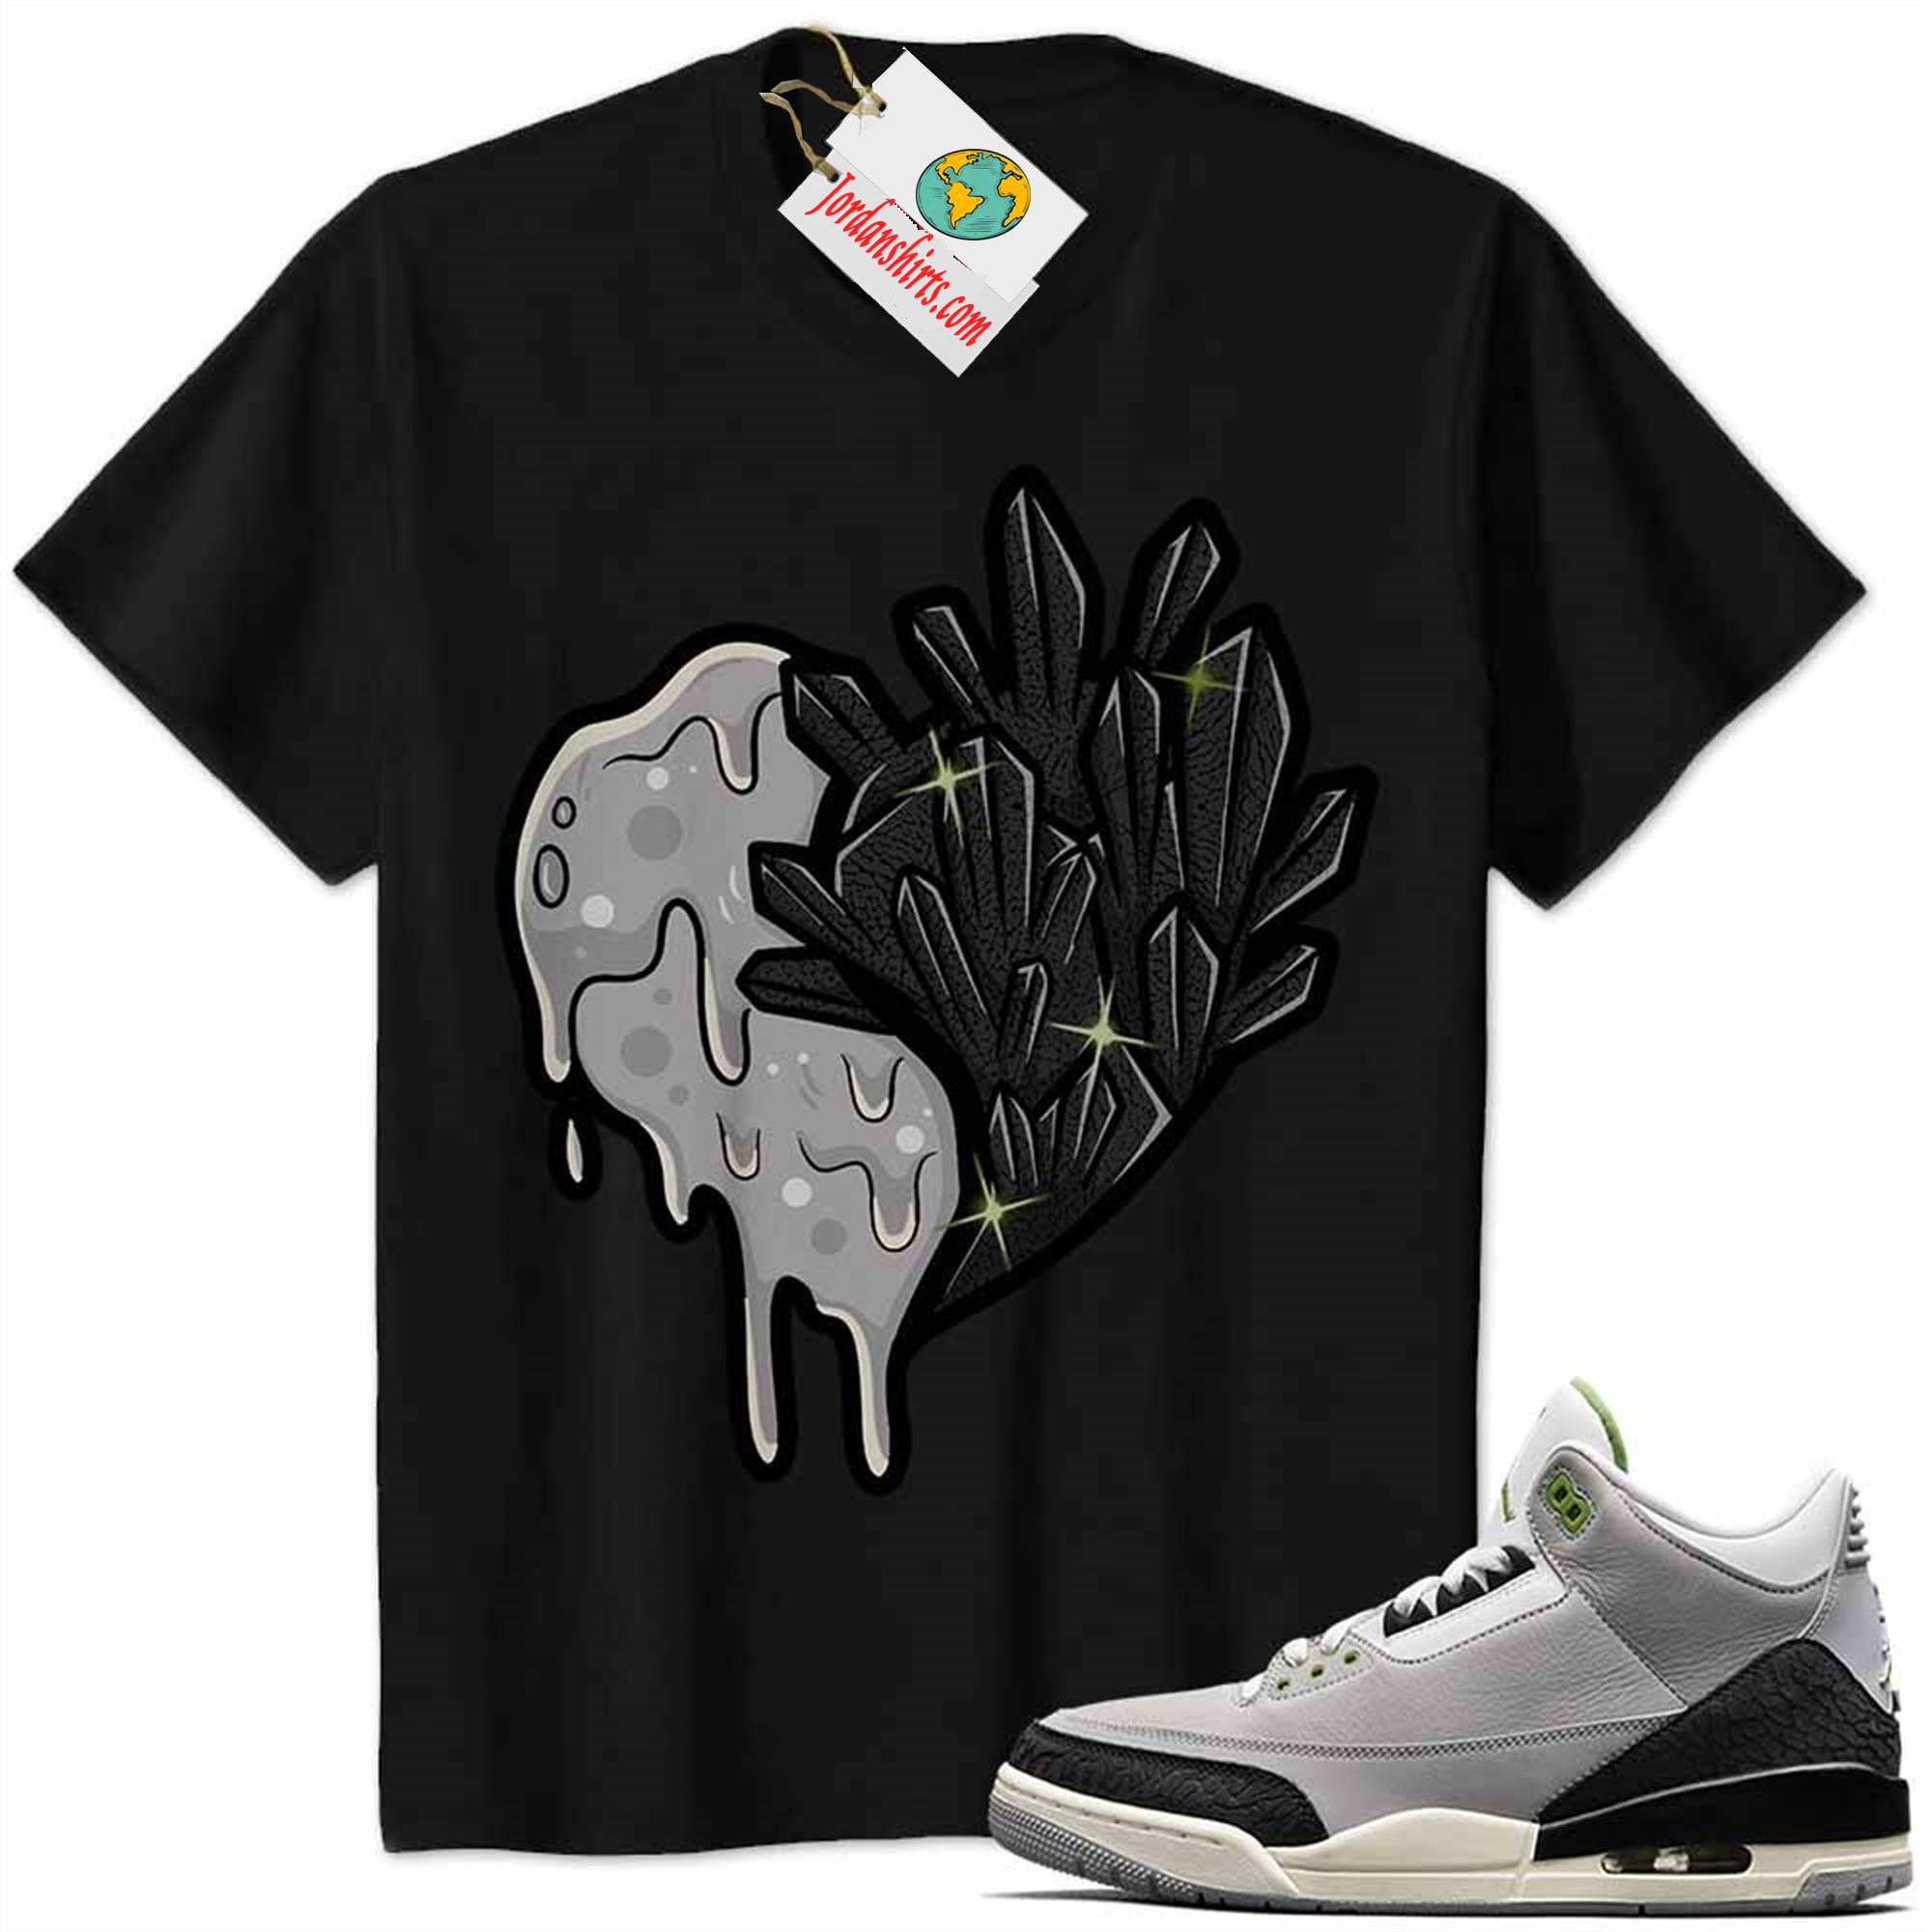 Jordan 3 Shirt, Crystal And Melt Heart Black Air Jordan 3 Chlorophyll 3s Plus Size Up To 5xl